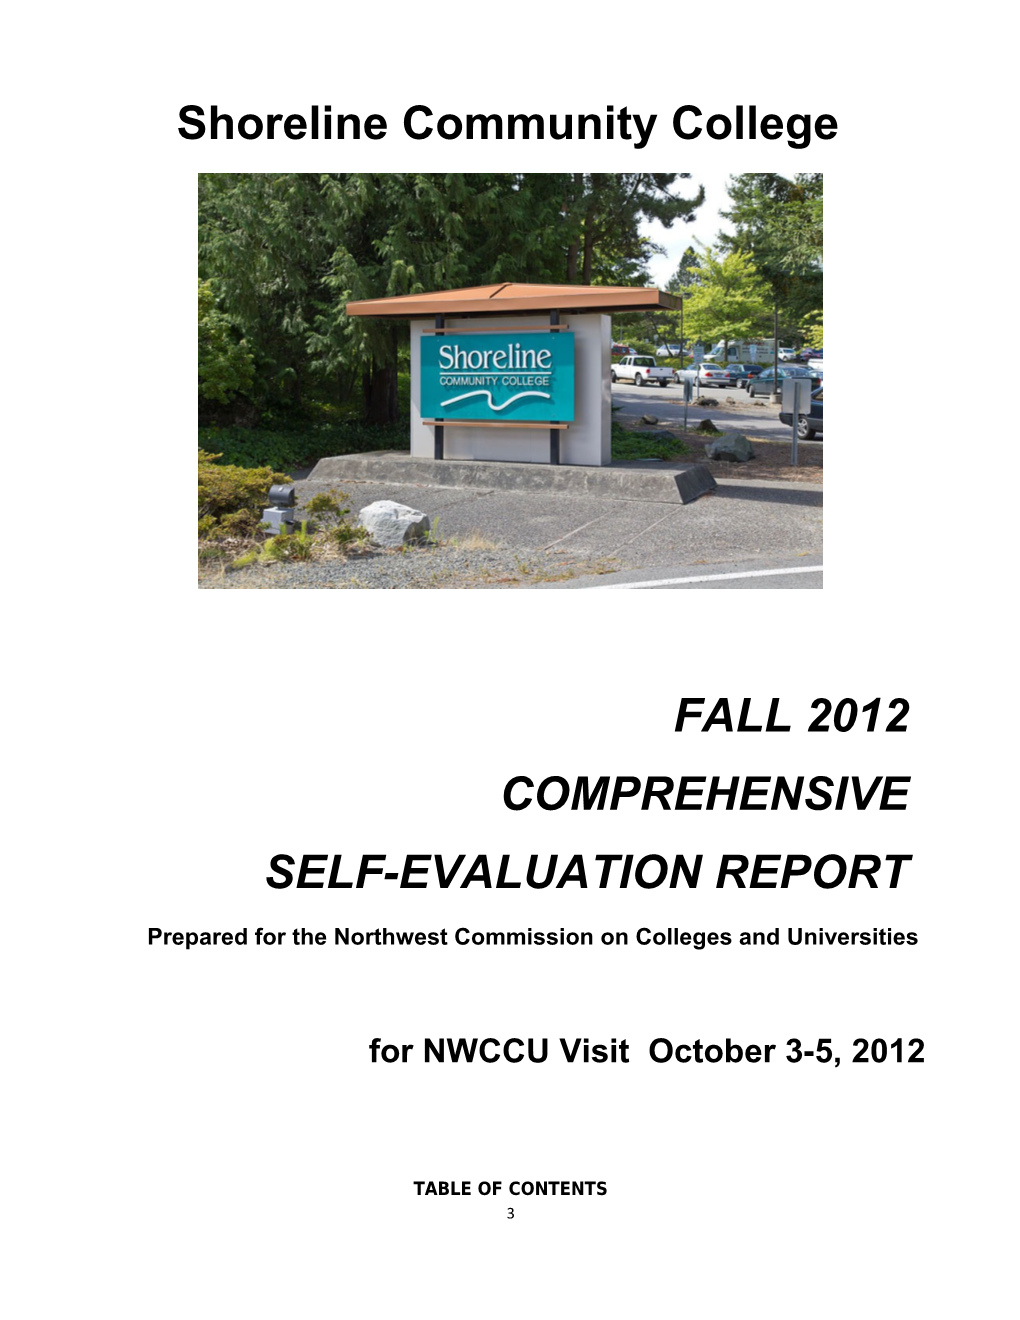 Fall 2012 Comprehensive Self-Evaluation Report